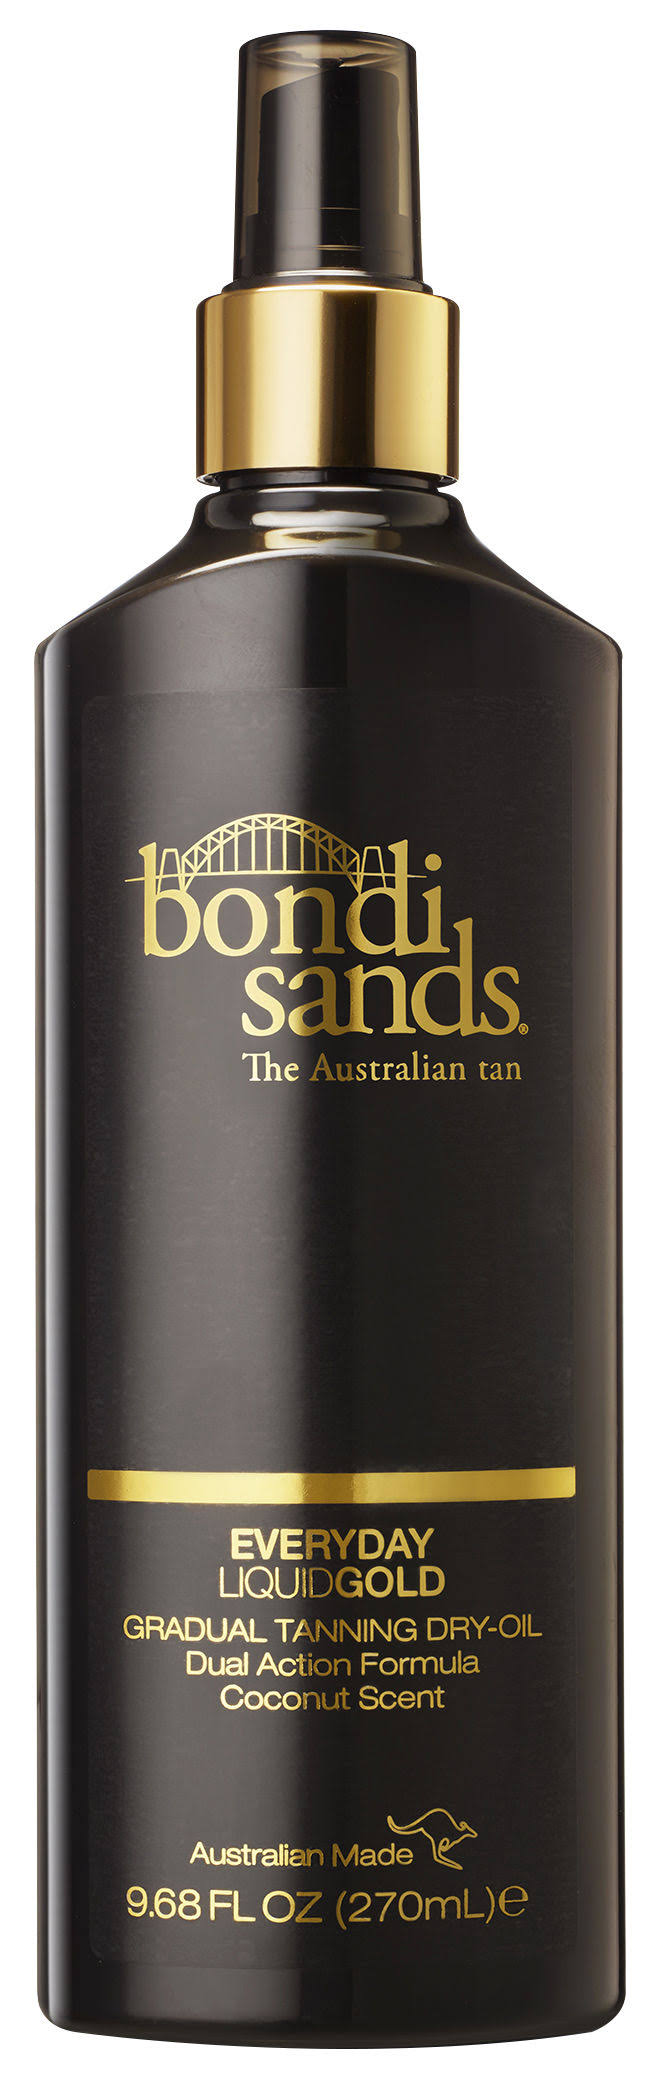 Bondi Sands Everyday Liquid Gold Gradual Tanning Dry Oil - 270ml